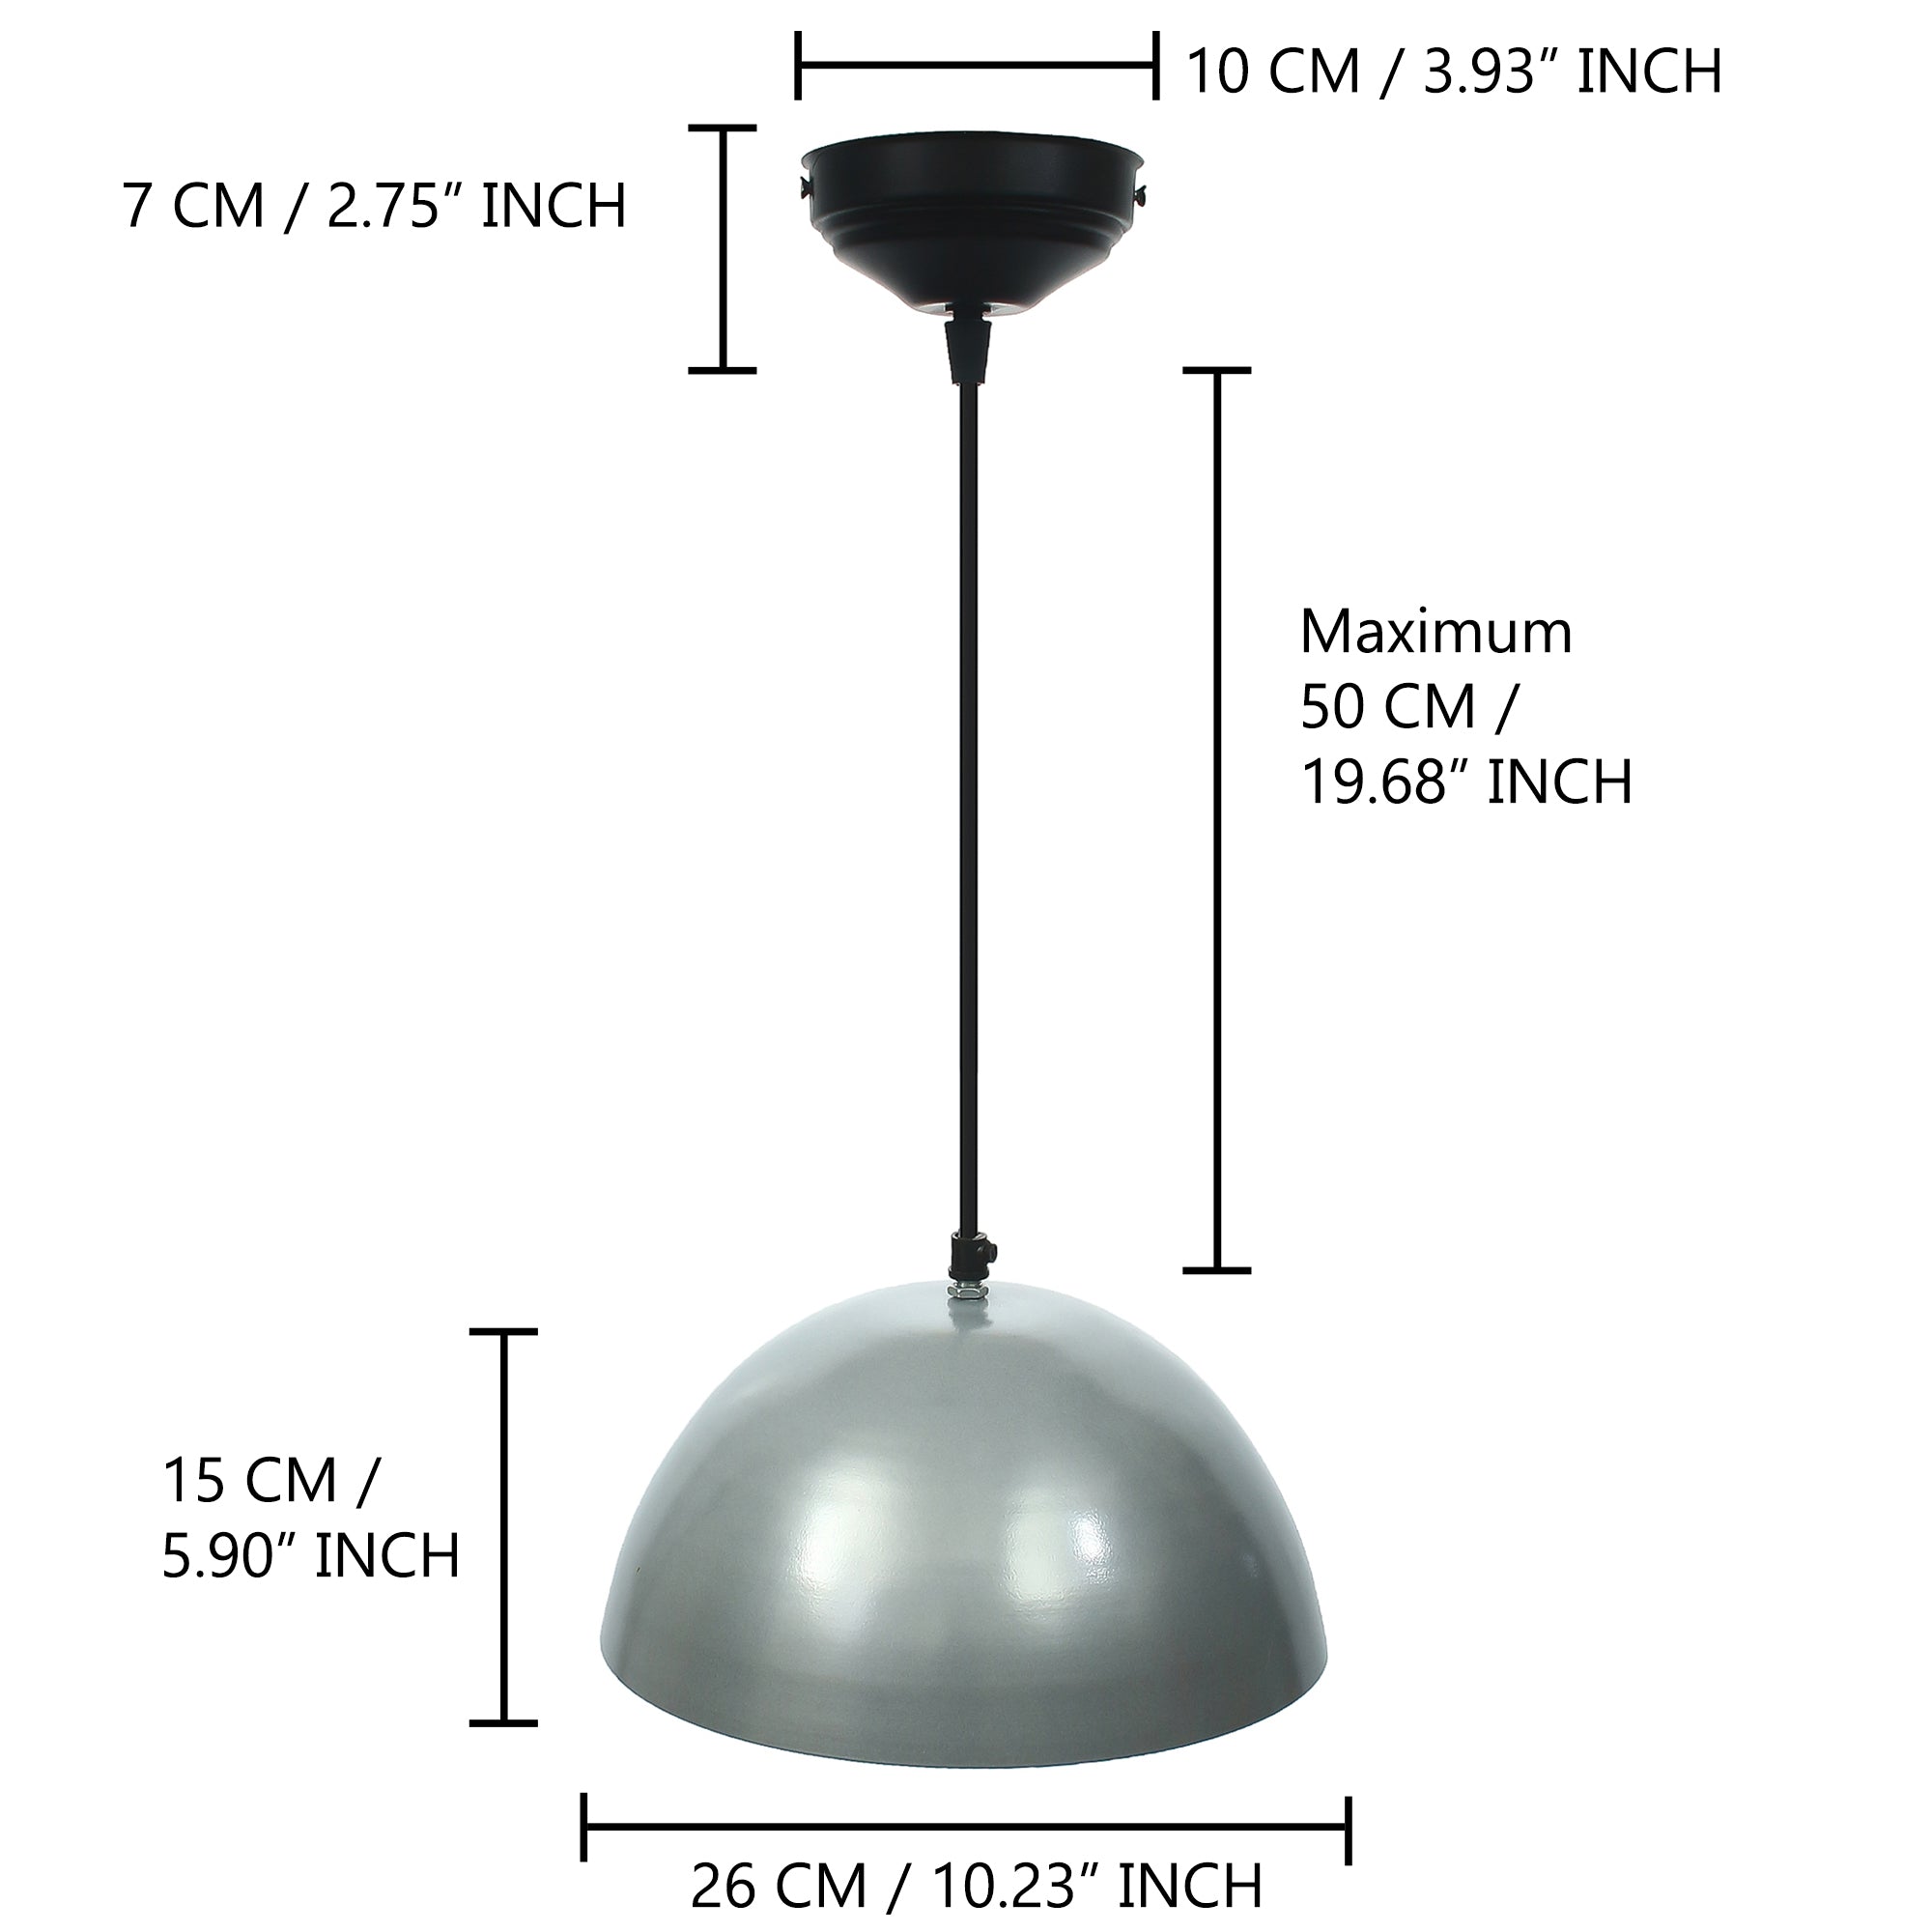 Shining Silver Glossy Finish Pendant Light, 10" Diameter Ceiling Hanging Lamp for Home/Living Room/Offices/Restaurants 3